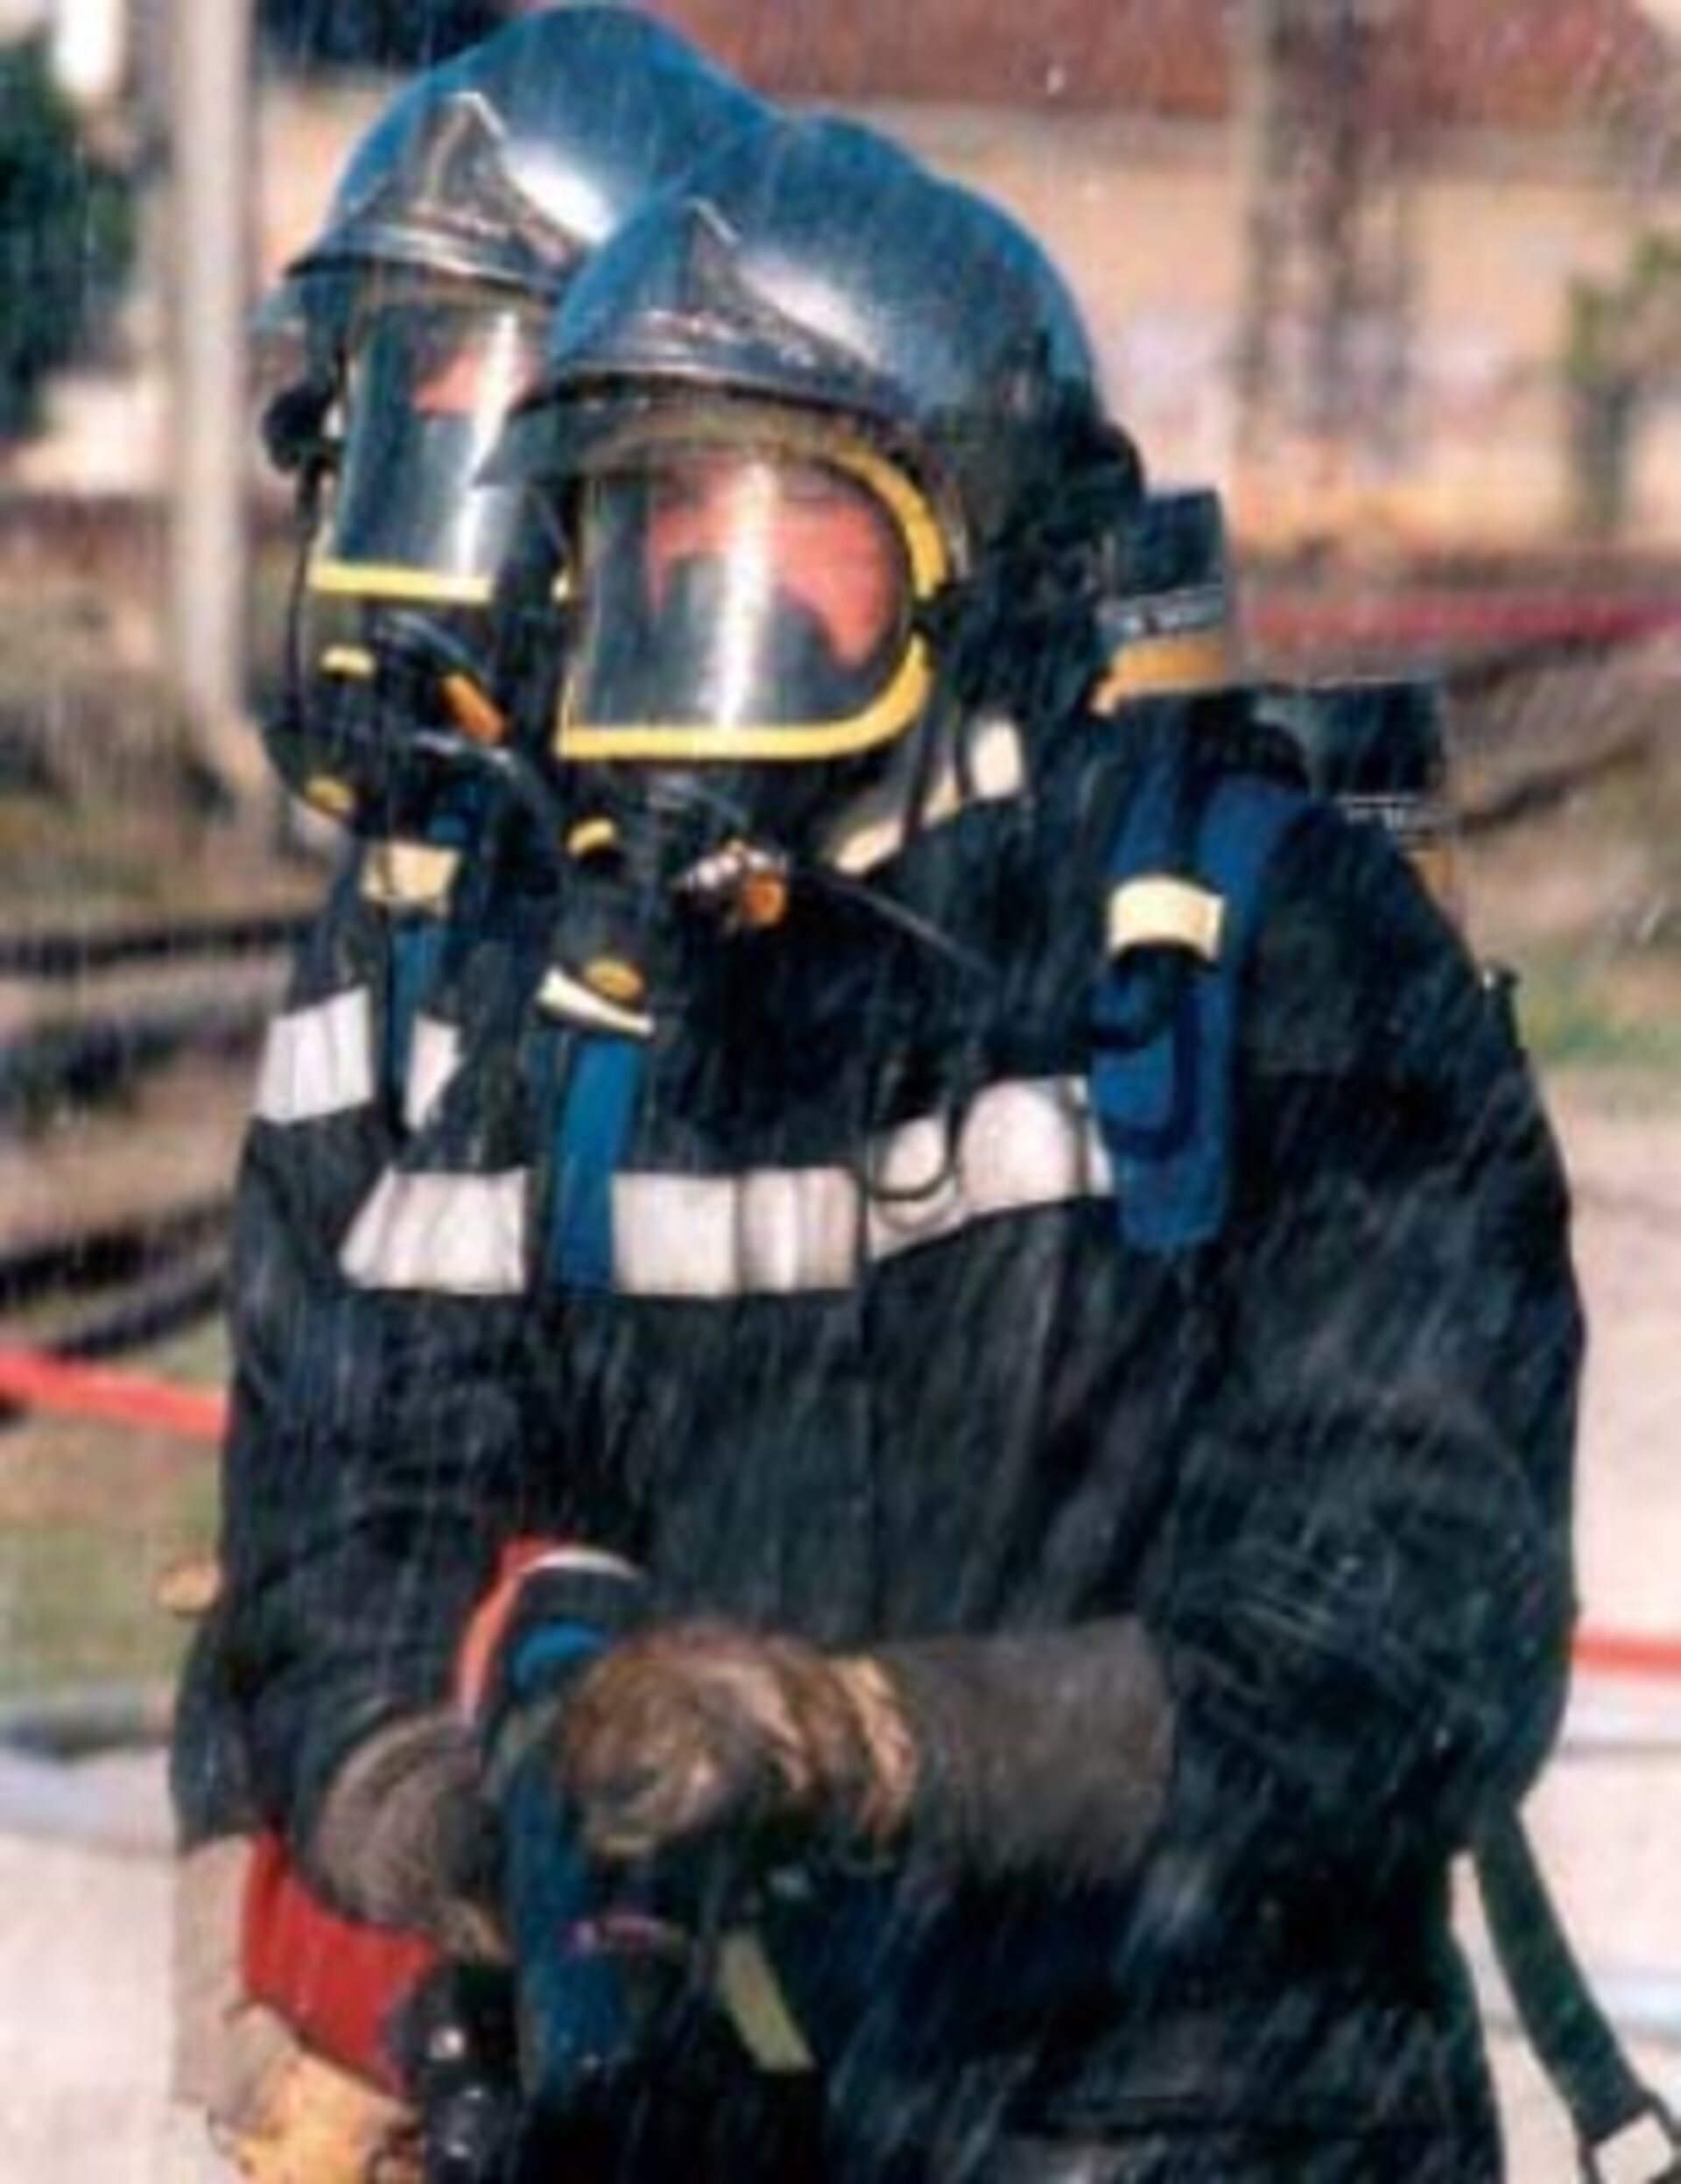 Firemen in protective gear